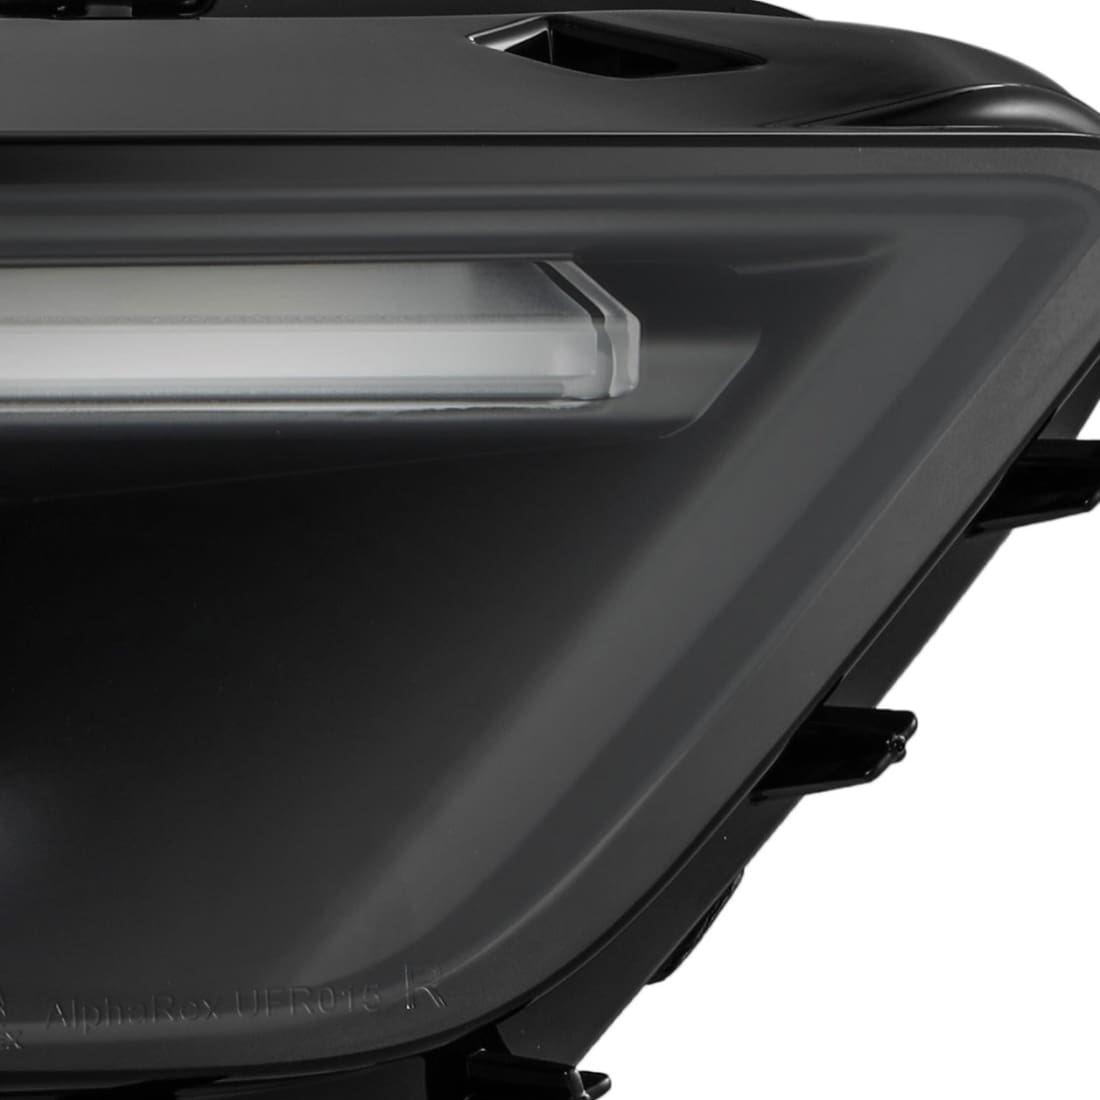 2015-2017 Mustang MKII NOVA-Series LED Projector Headlights Black